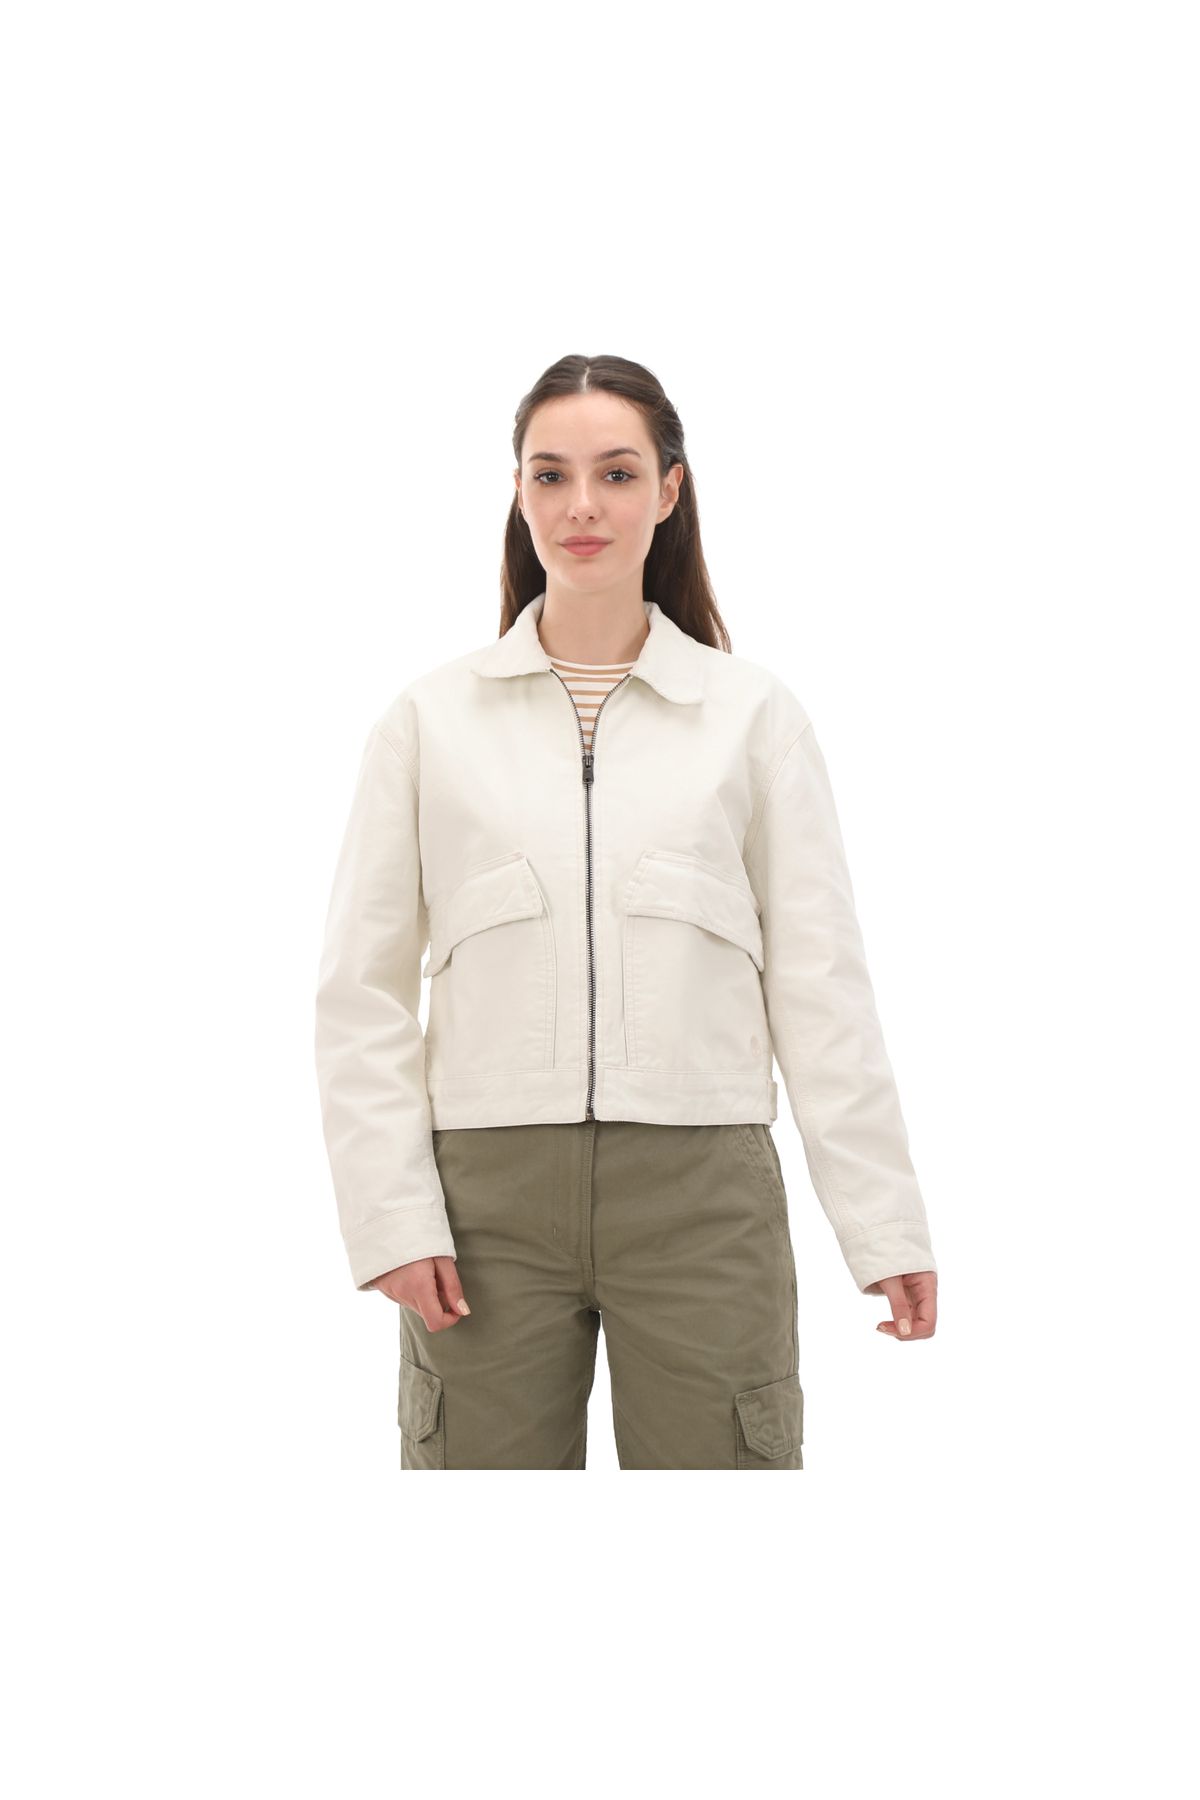 Timberland B0A5VJ7CM91-R Timberland Washed Canvas Jacket Kadın Ceket Beyaz